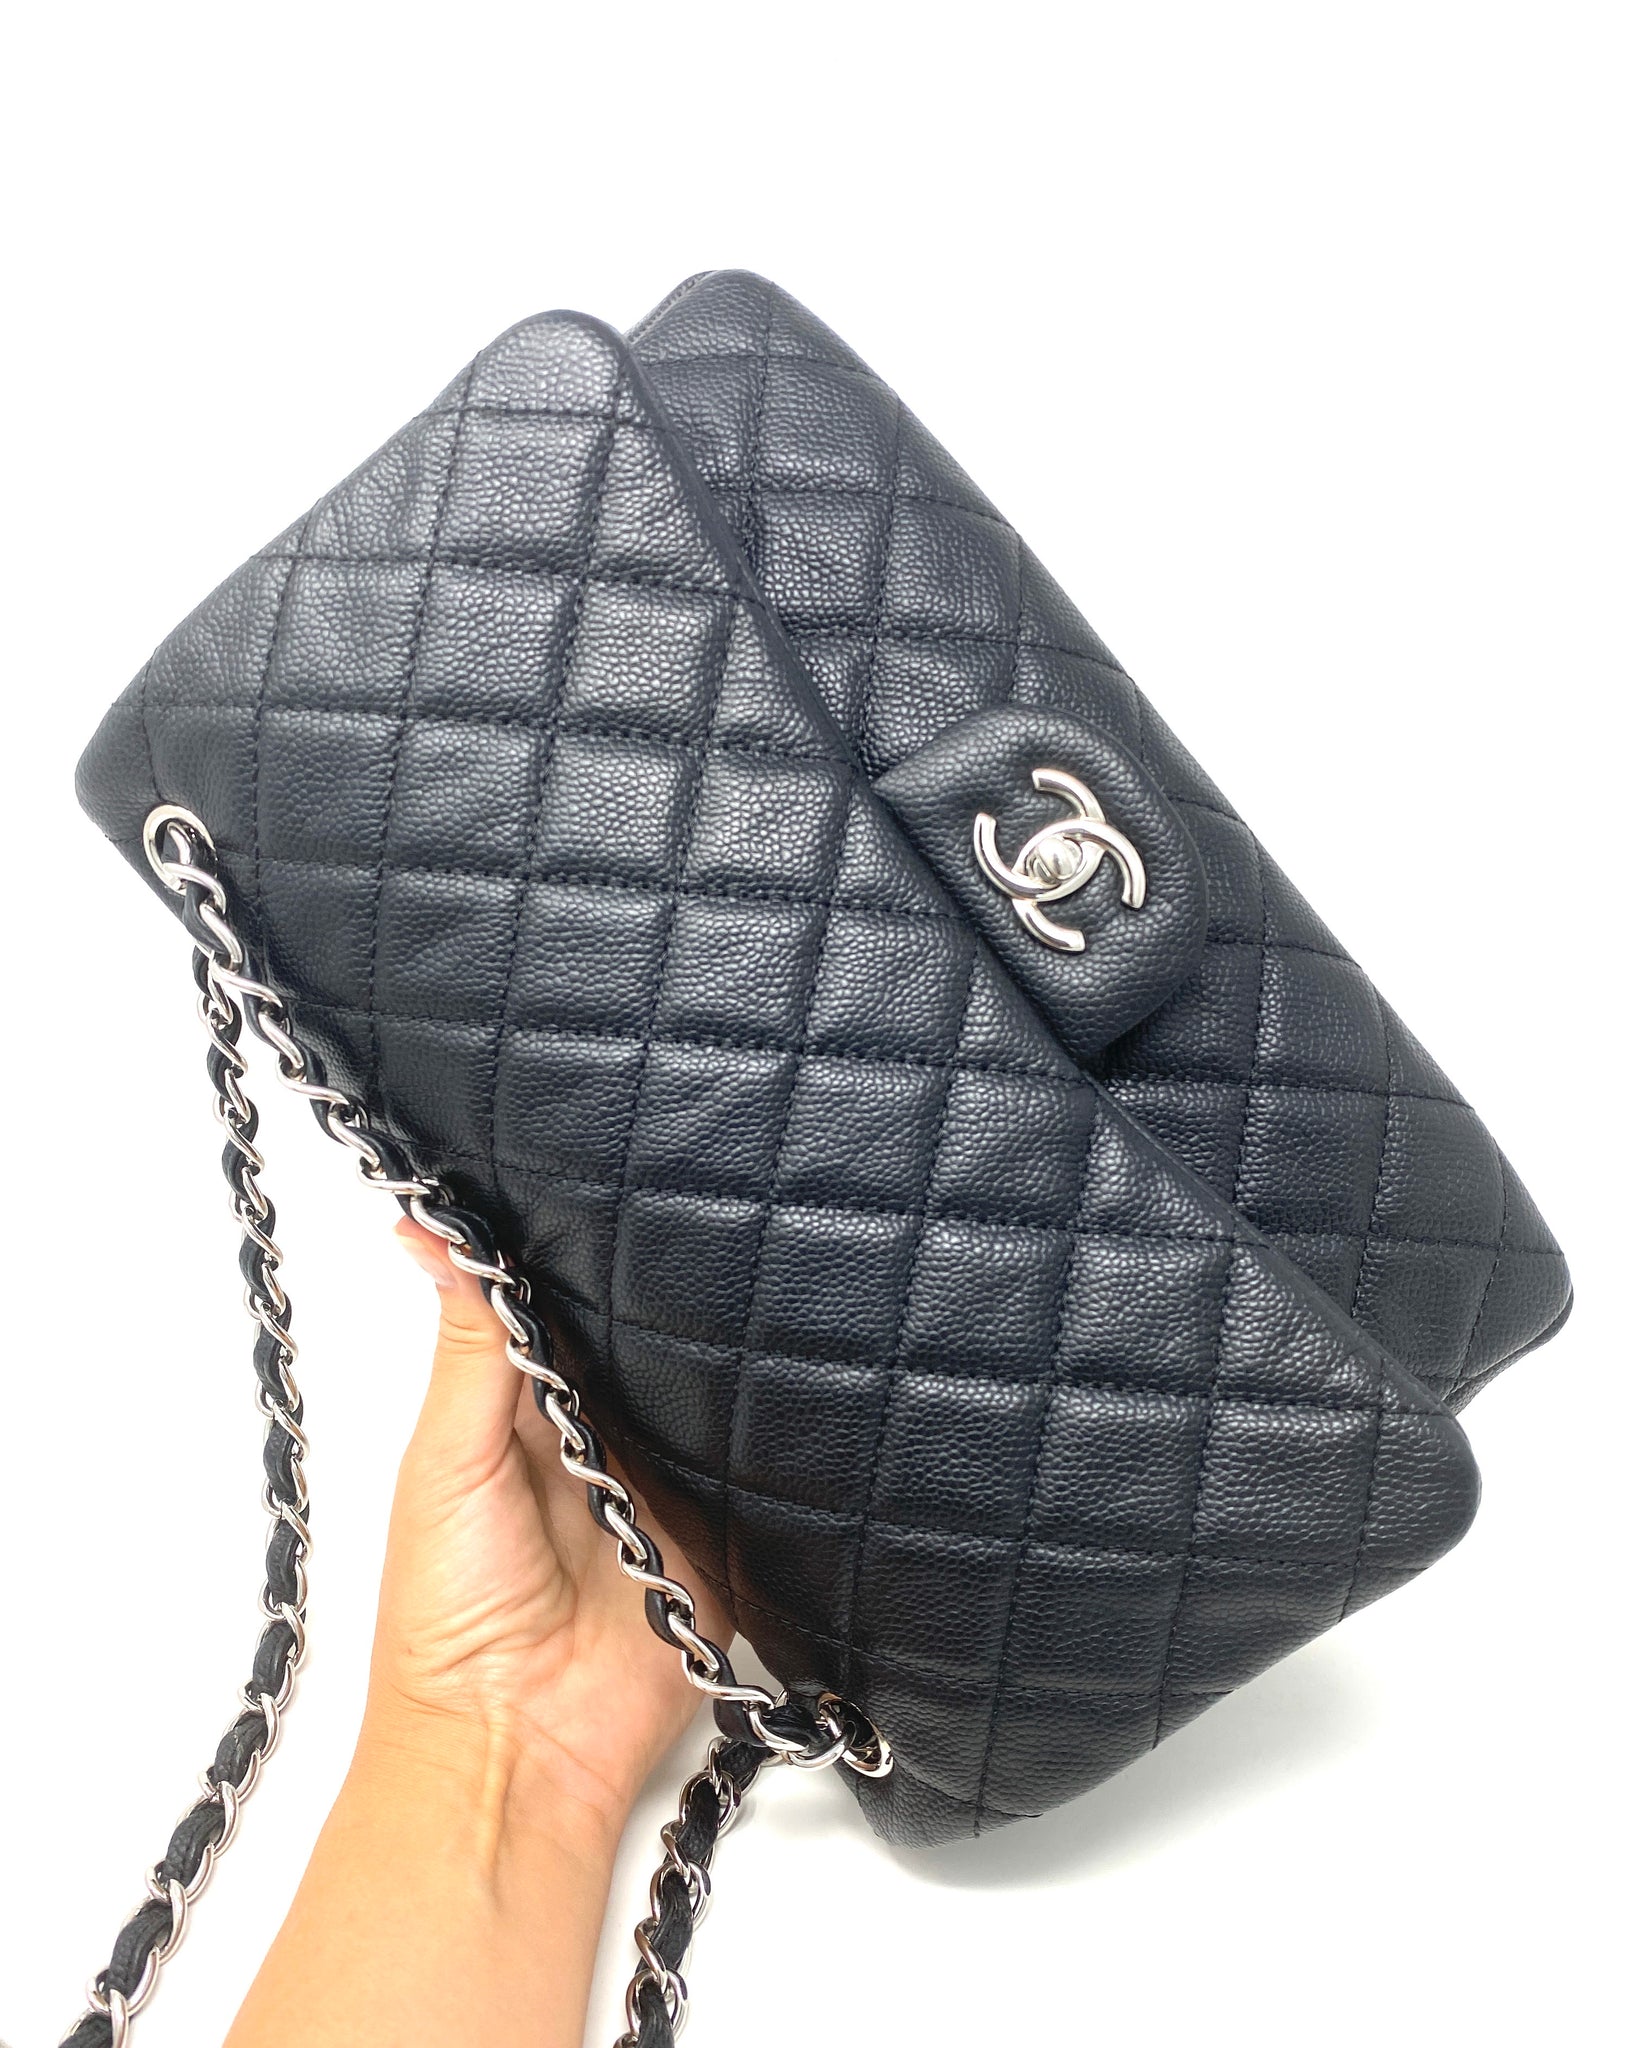 Chanel Classic Large Timeless Flap Bag Black Calfskin